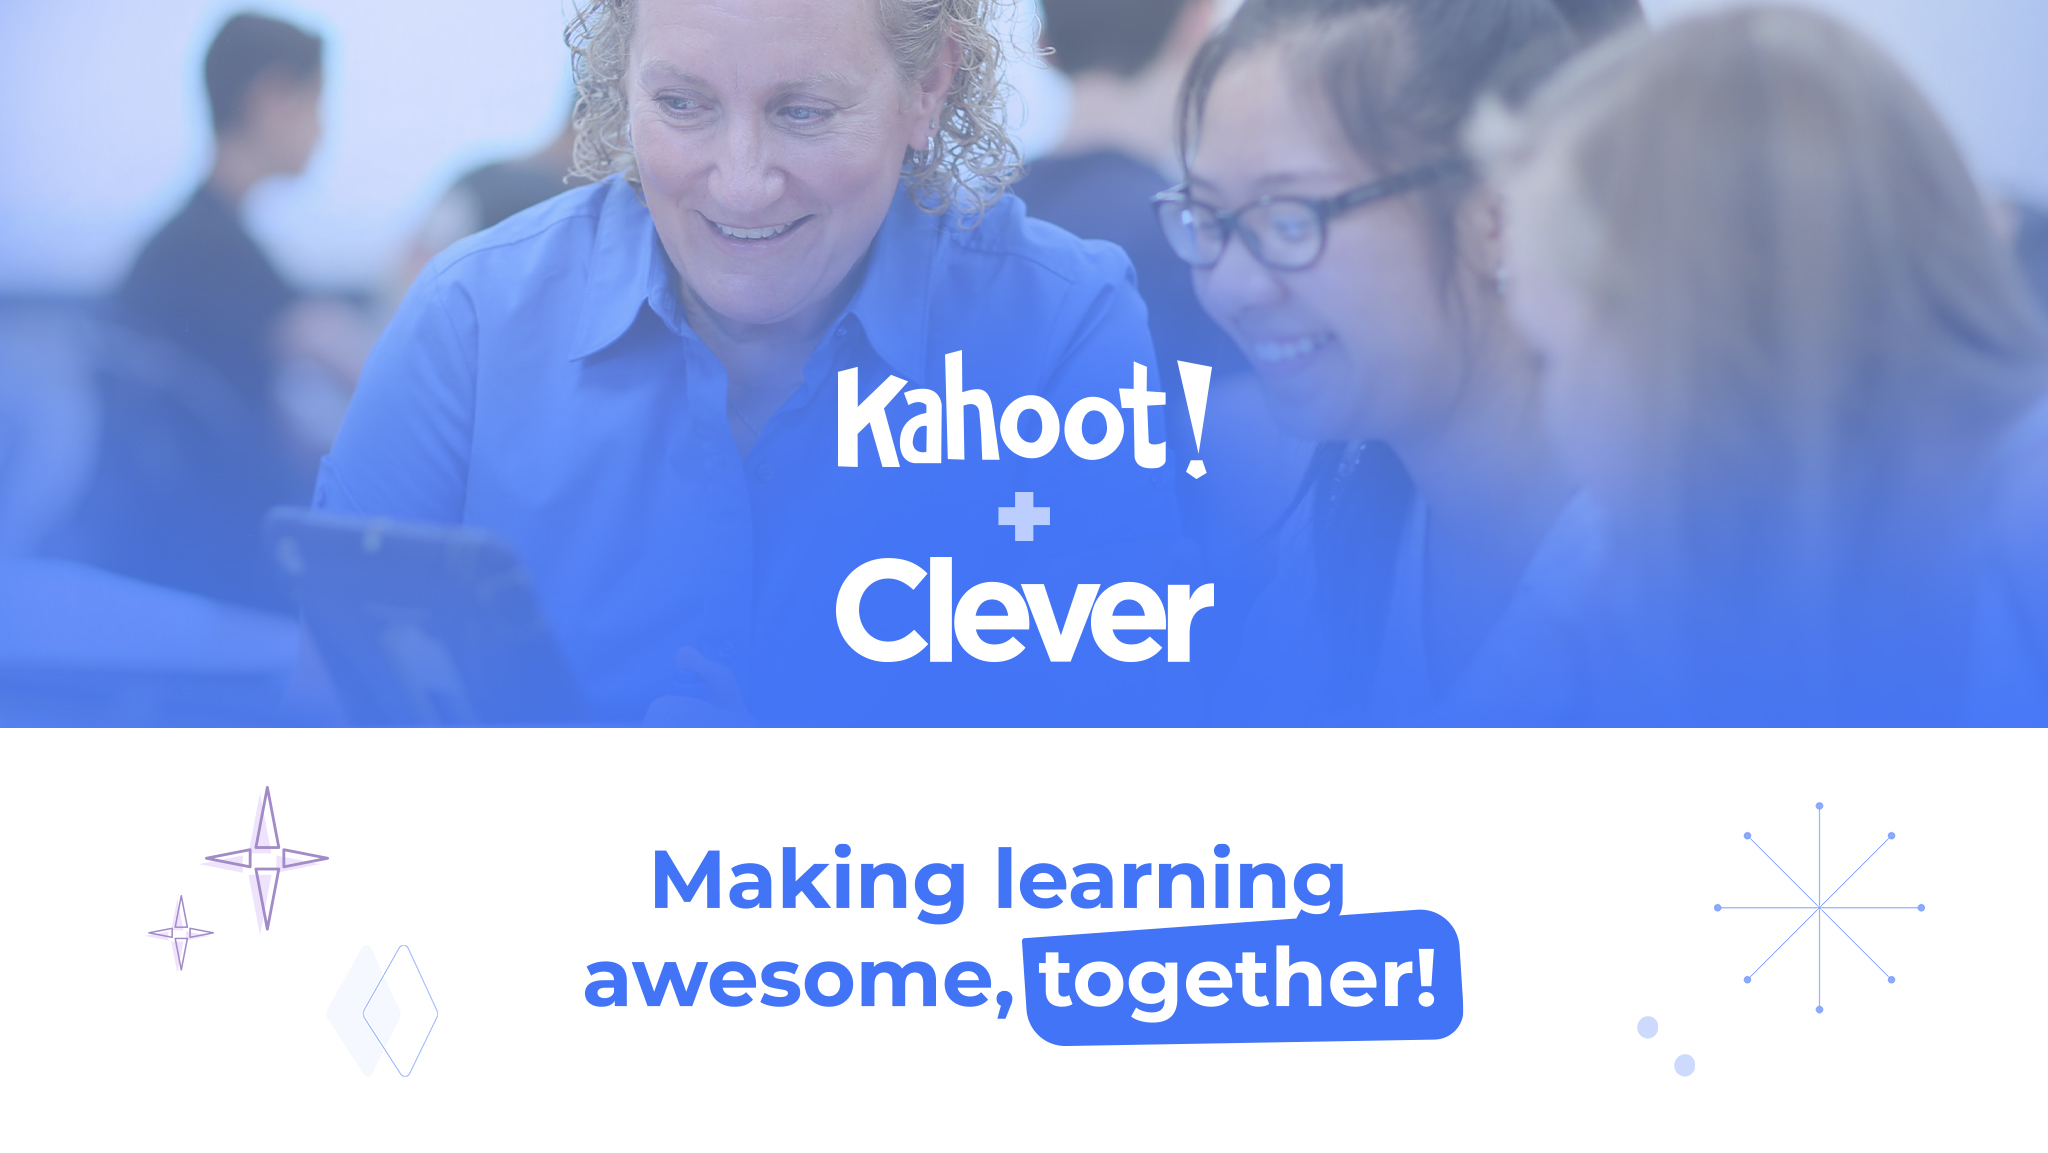 TecMundo showcases Kahoot! as an innovative studying companion